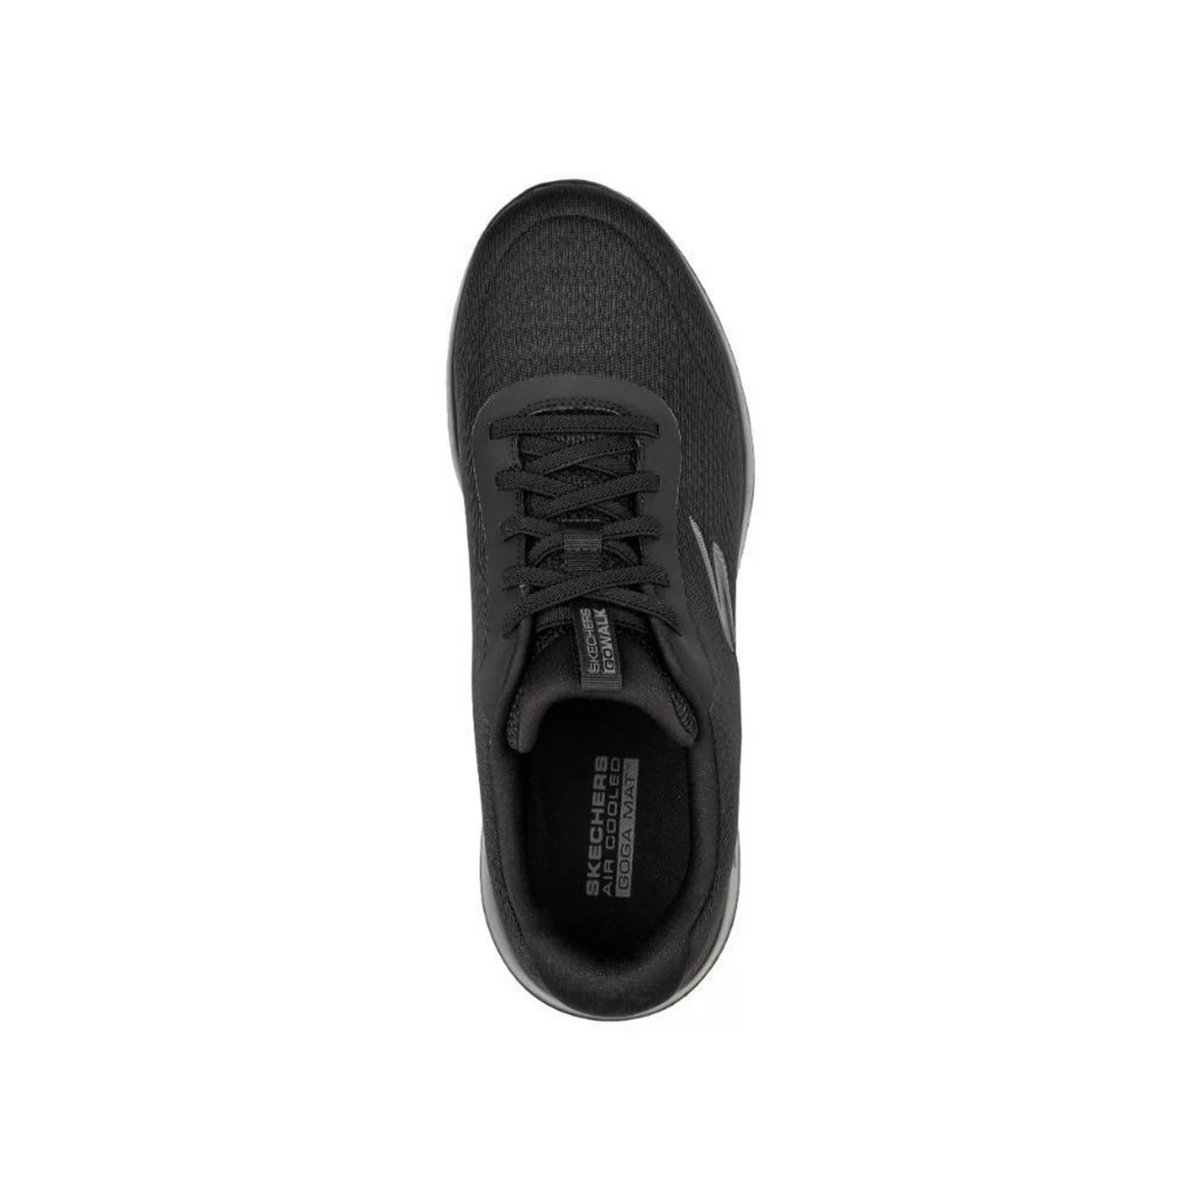 Skechers Go Walk Max Midshore Shoes For Men, Black